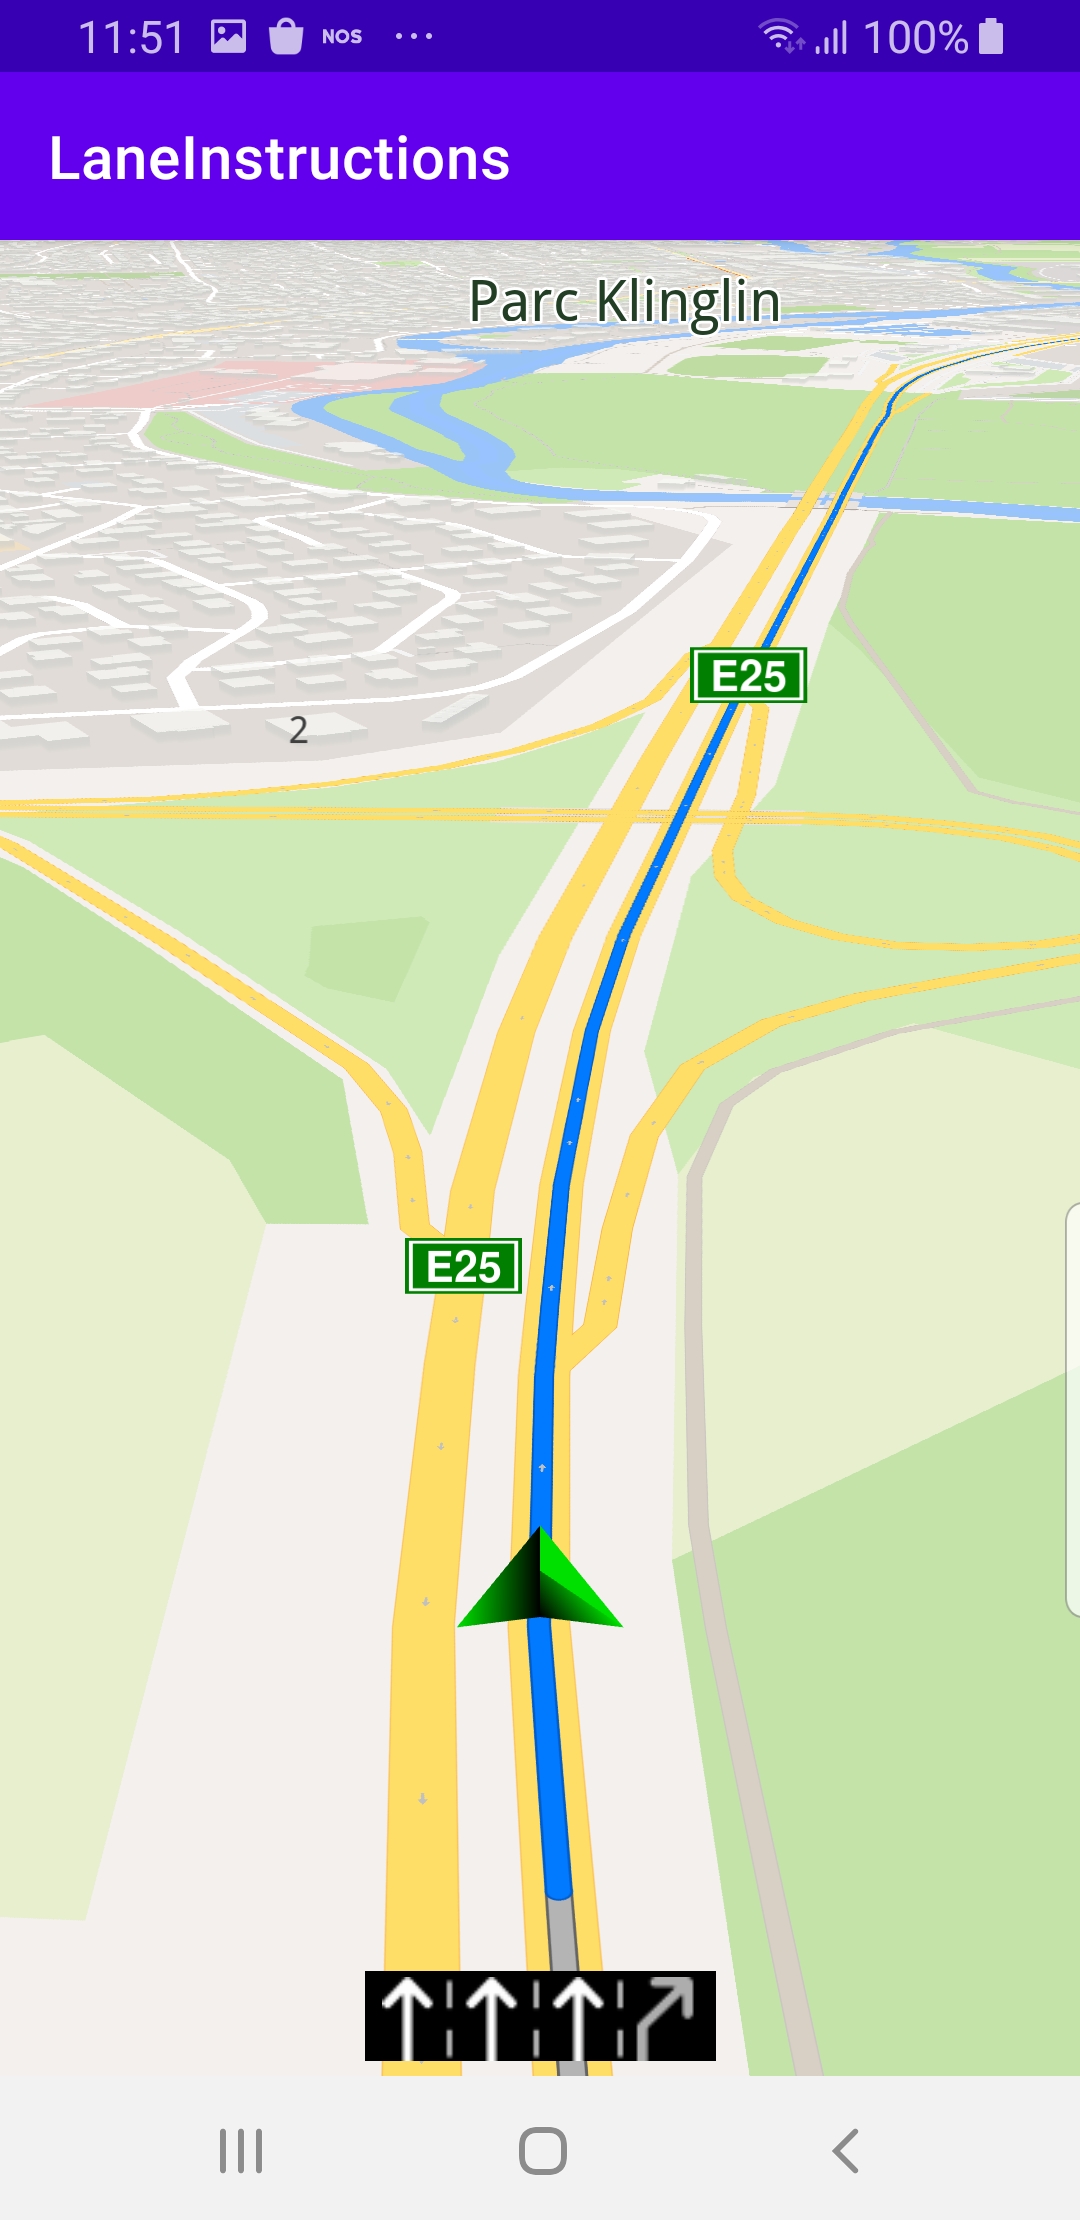 Lane instructions simulated navigation example Android screenshot